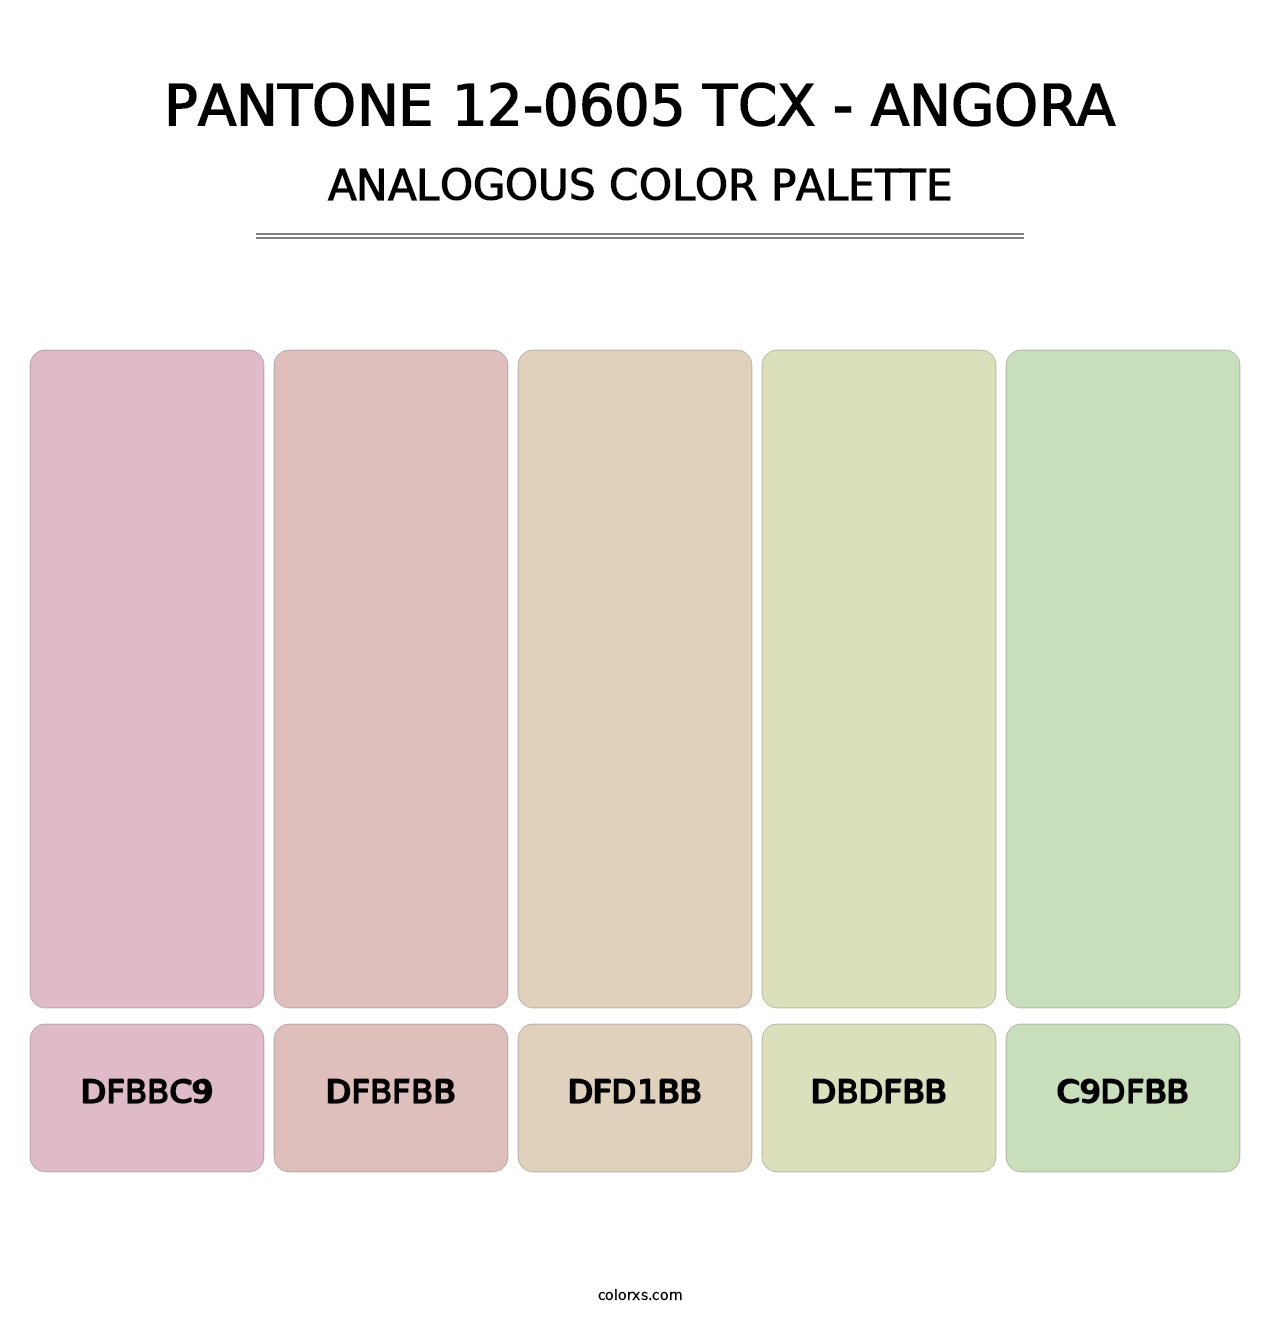 PANTONE 12-0605 TCX - Angora - Analogous Color Palette